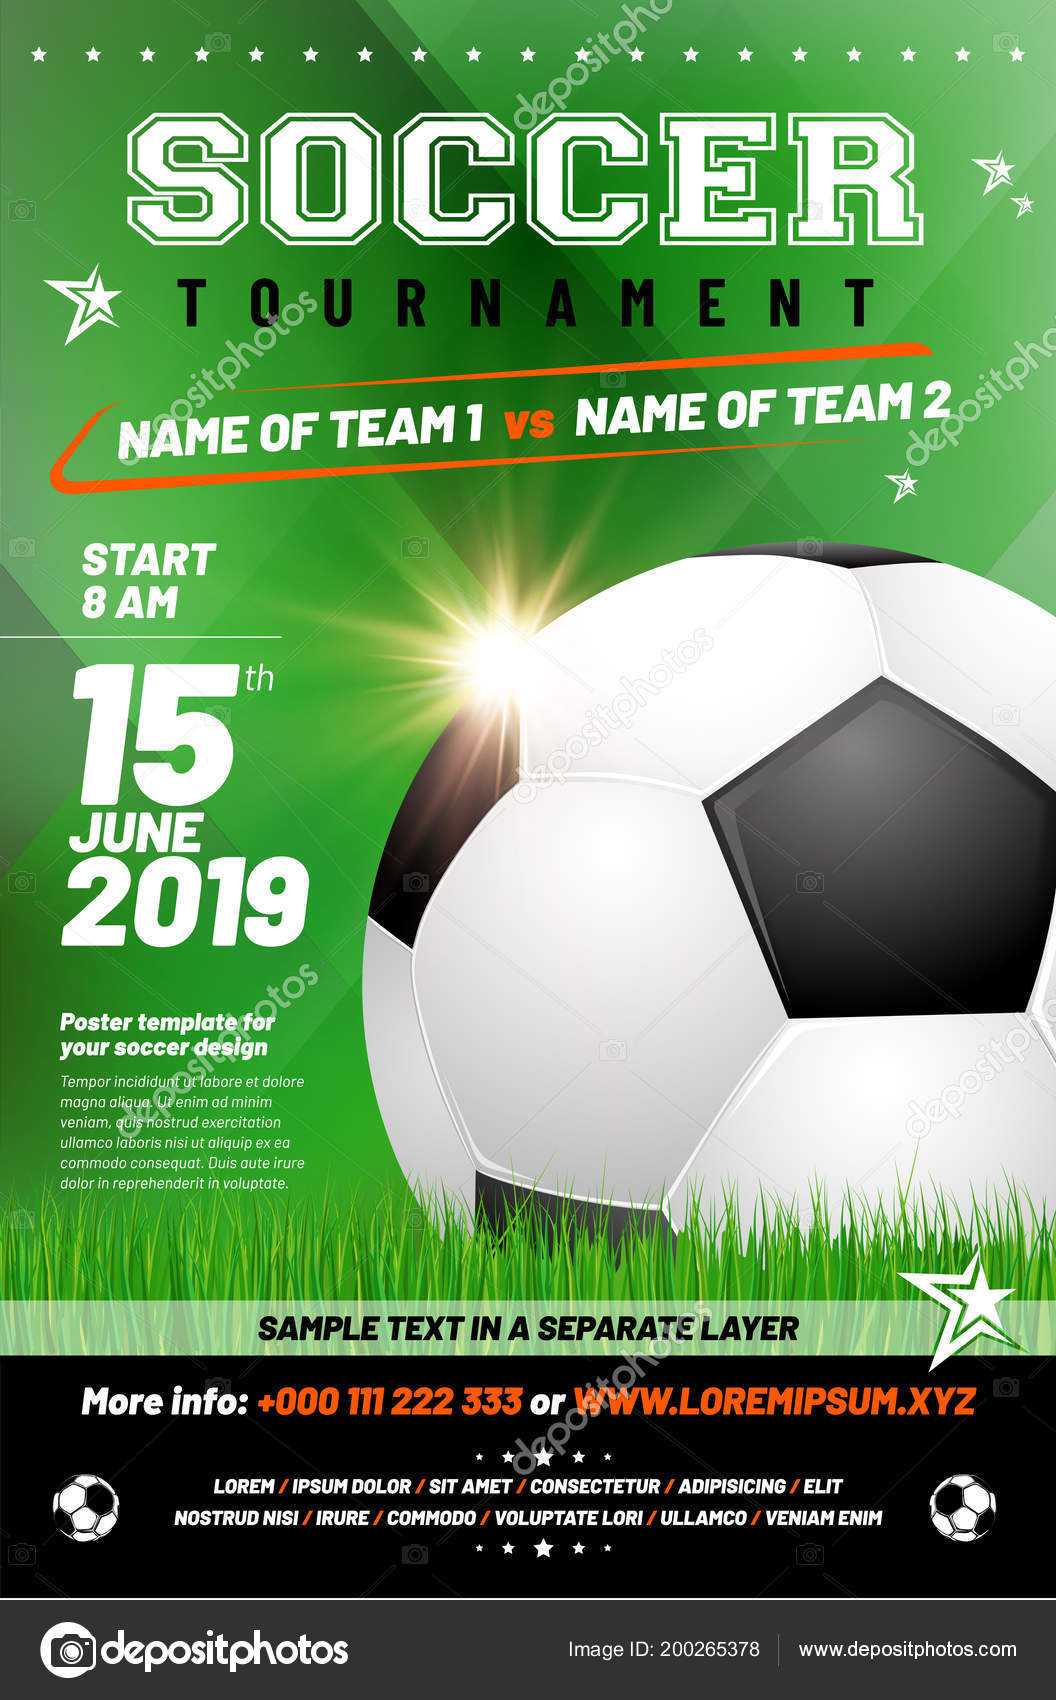 Sample Soccer Flyers Soccer Tournament Poster Template For Football